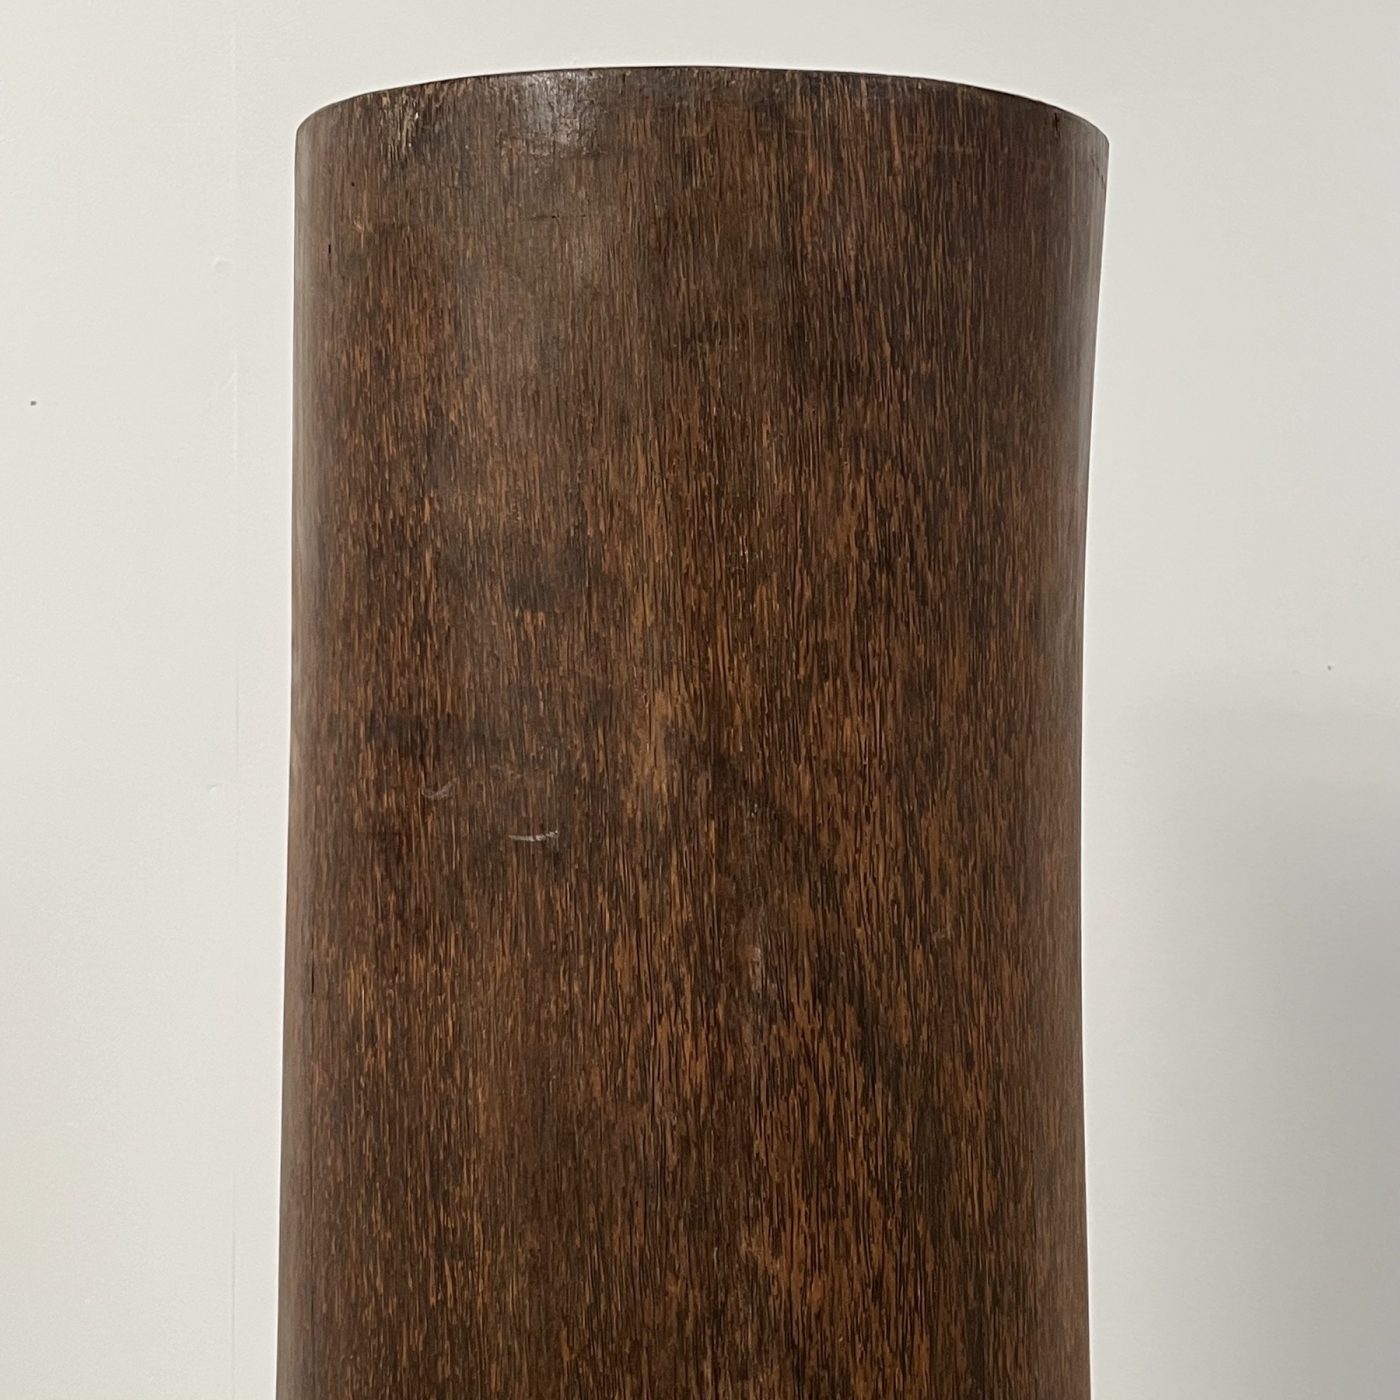 objet-vagabond-wooden-fragment0004